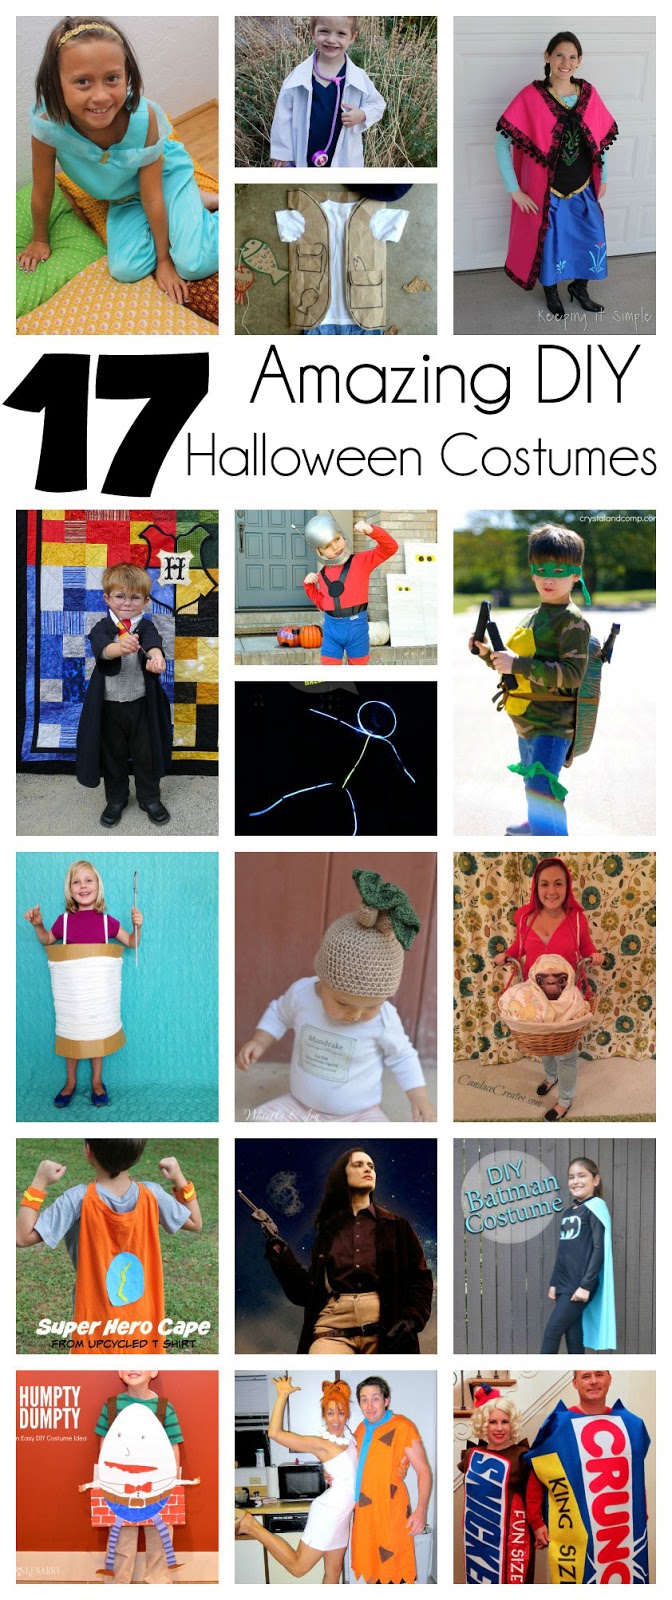 17 Amazing DIY Halloween Costumes {MMM #299 Block Party} - Keeping